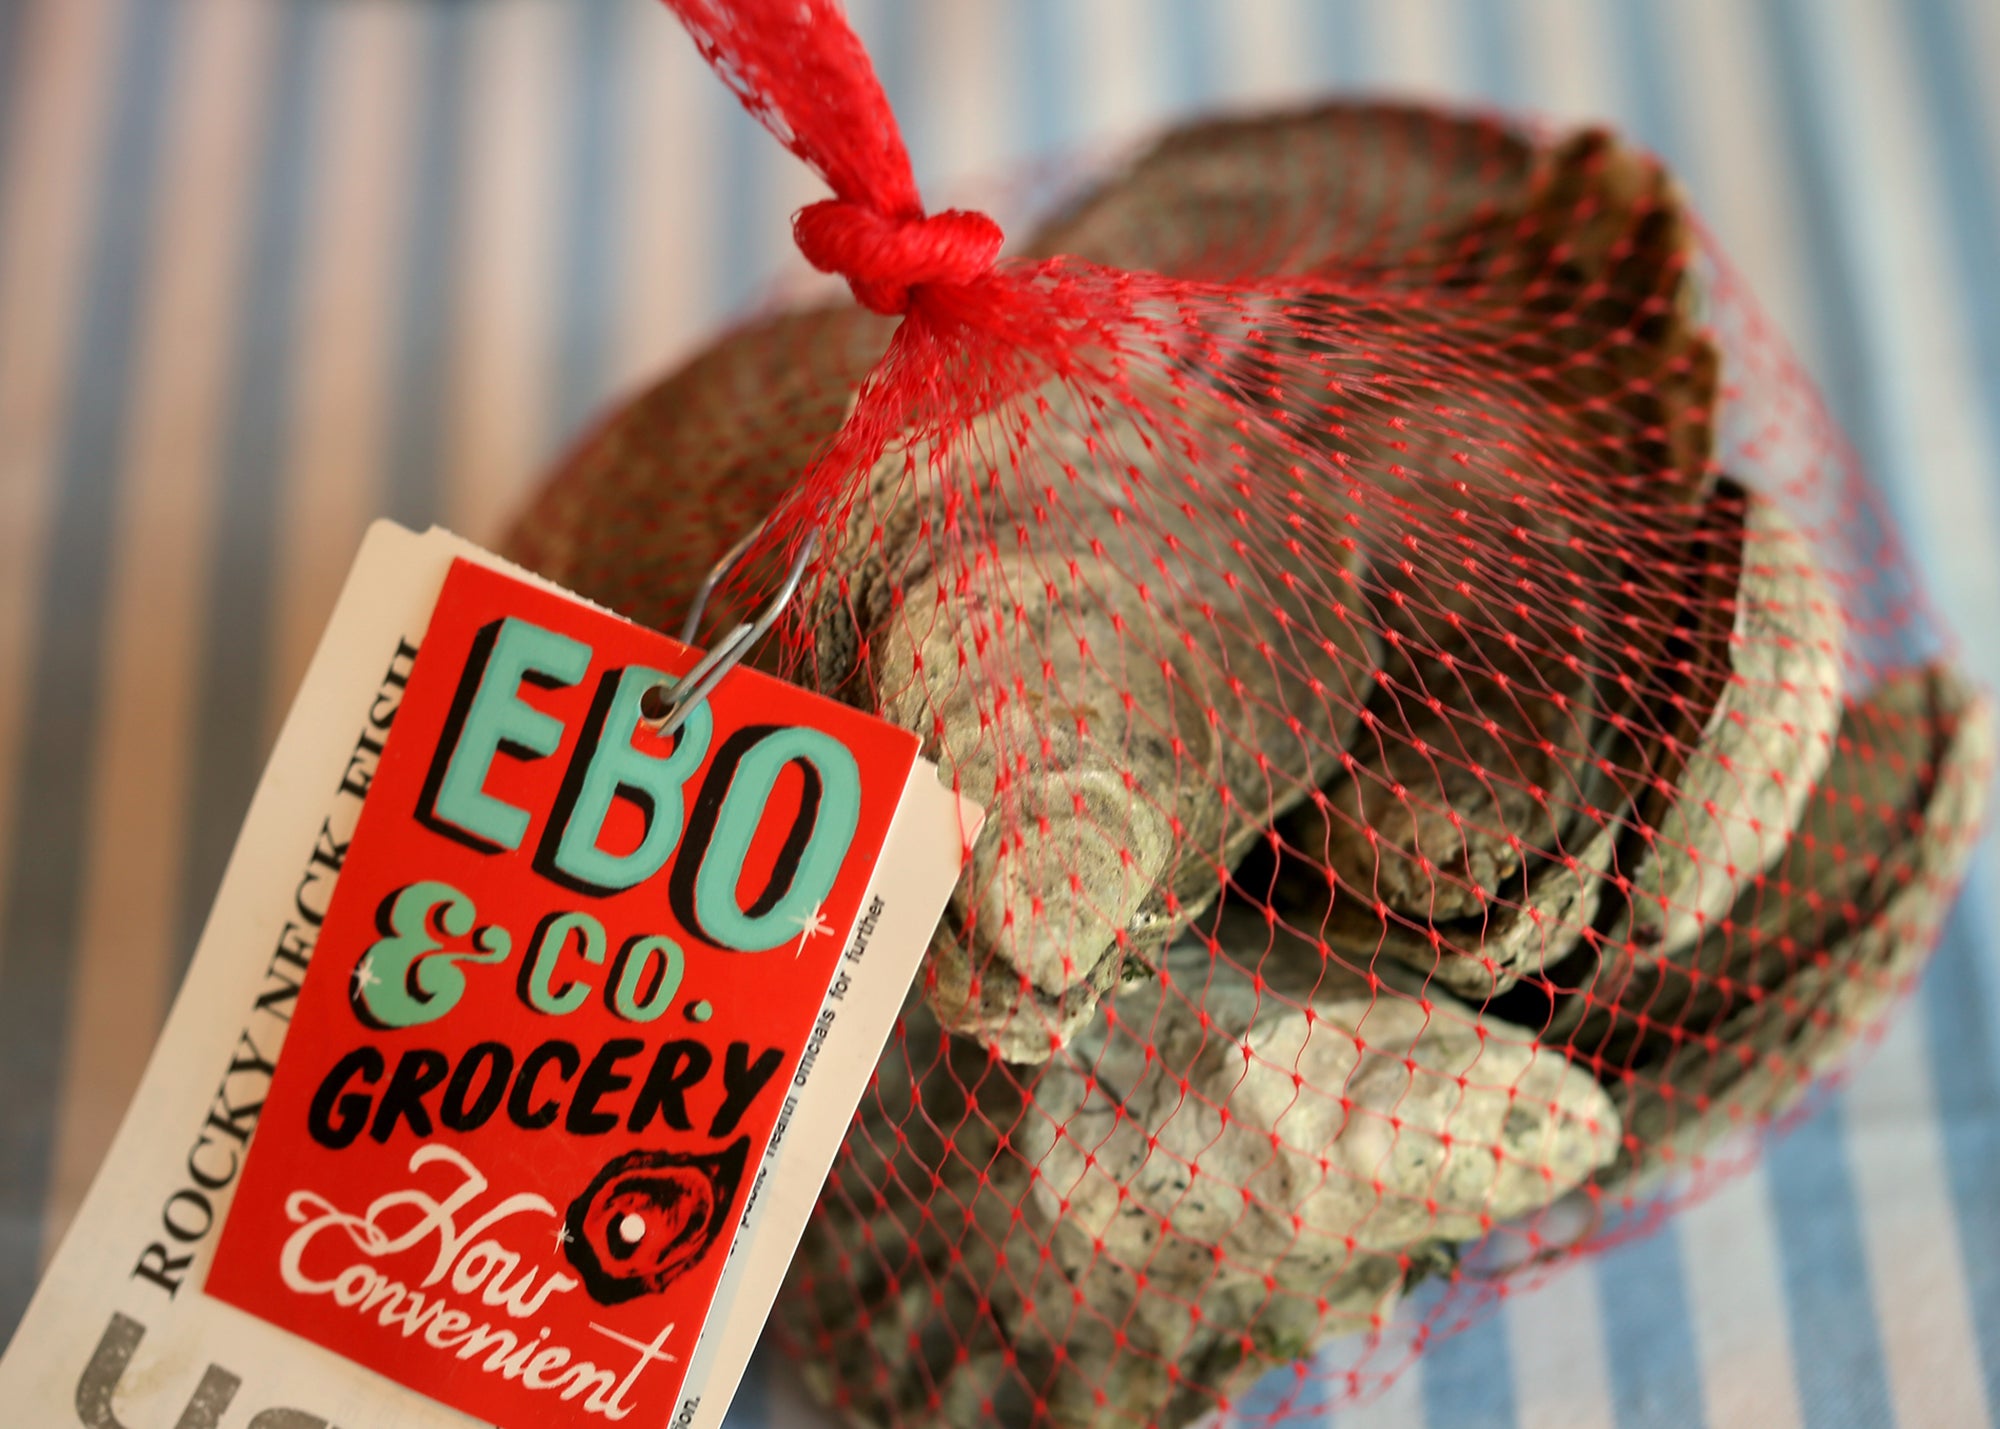 EBO & Co. Grocery